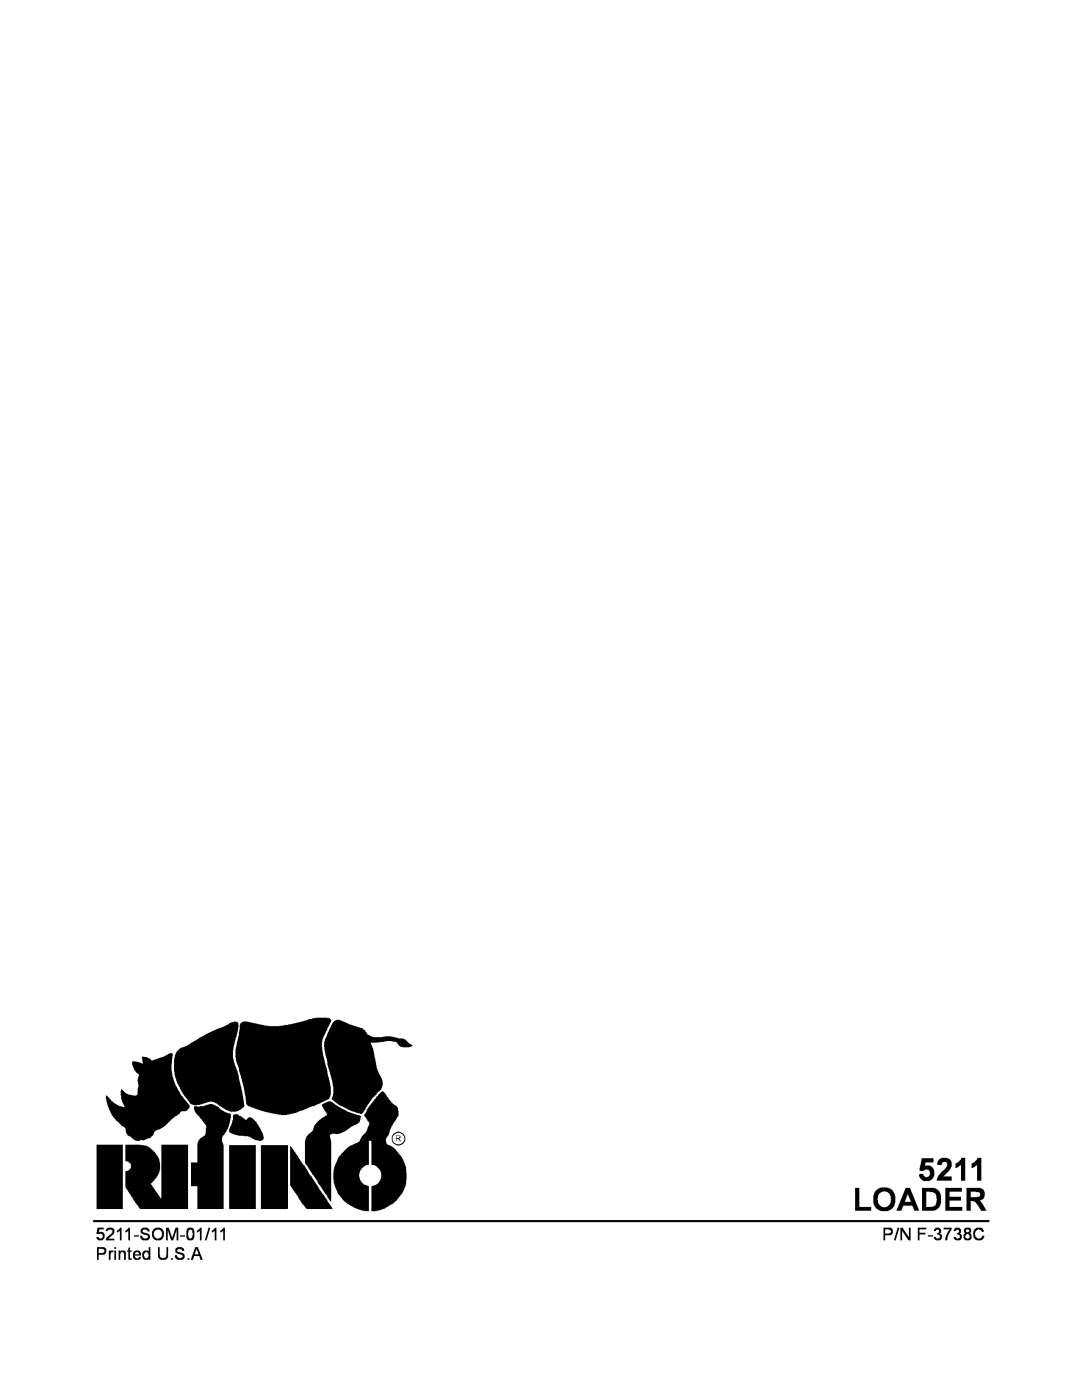 Servis-Rhino 5211 manual Loader, SOM-01/11, P/N F-3738C, Printed U.S.A 